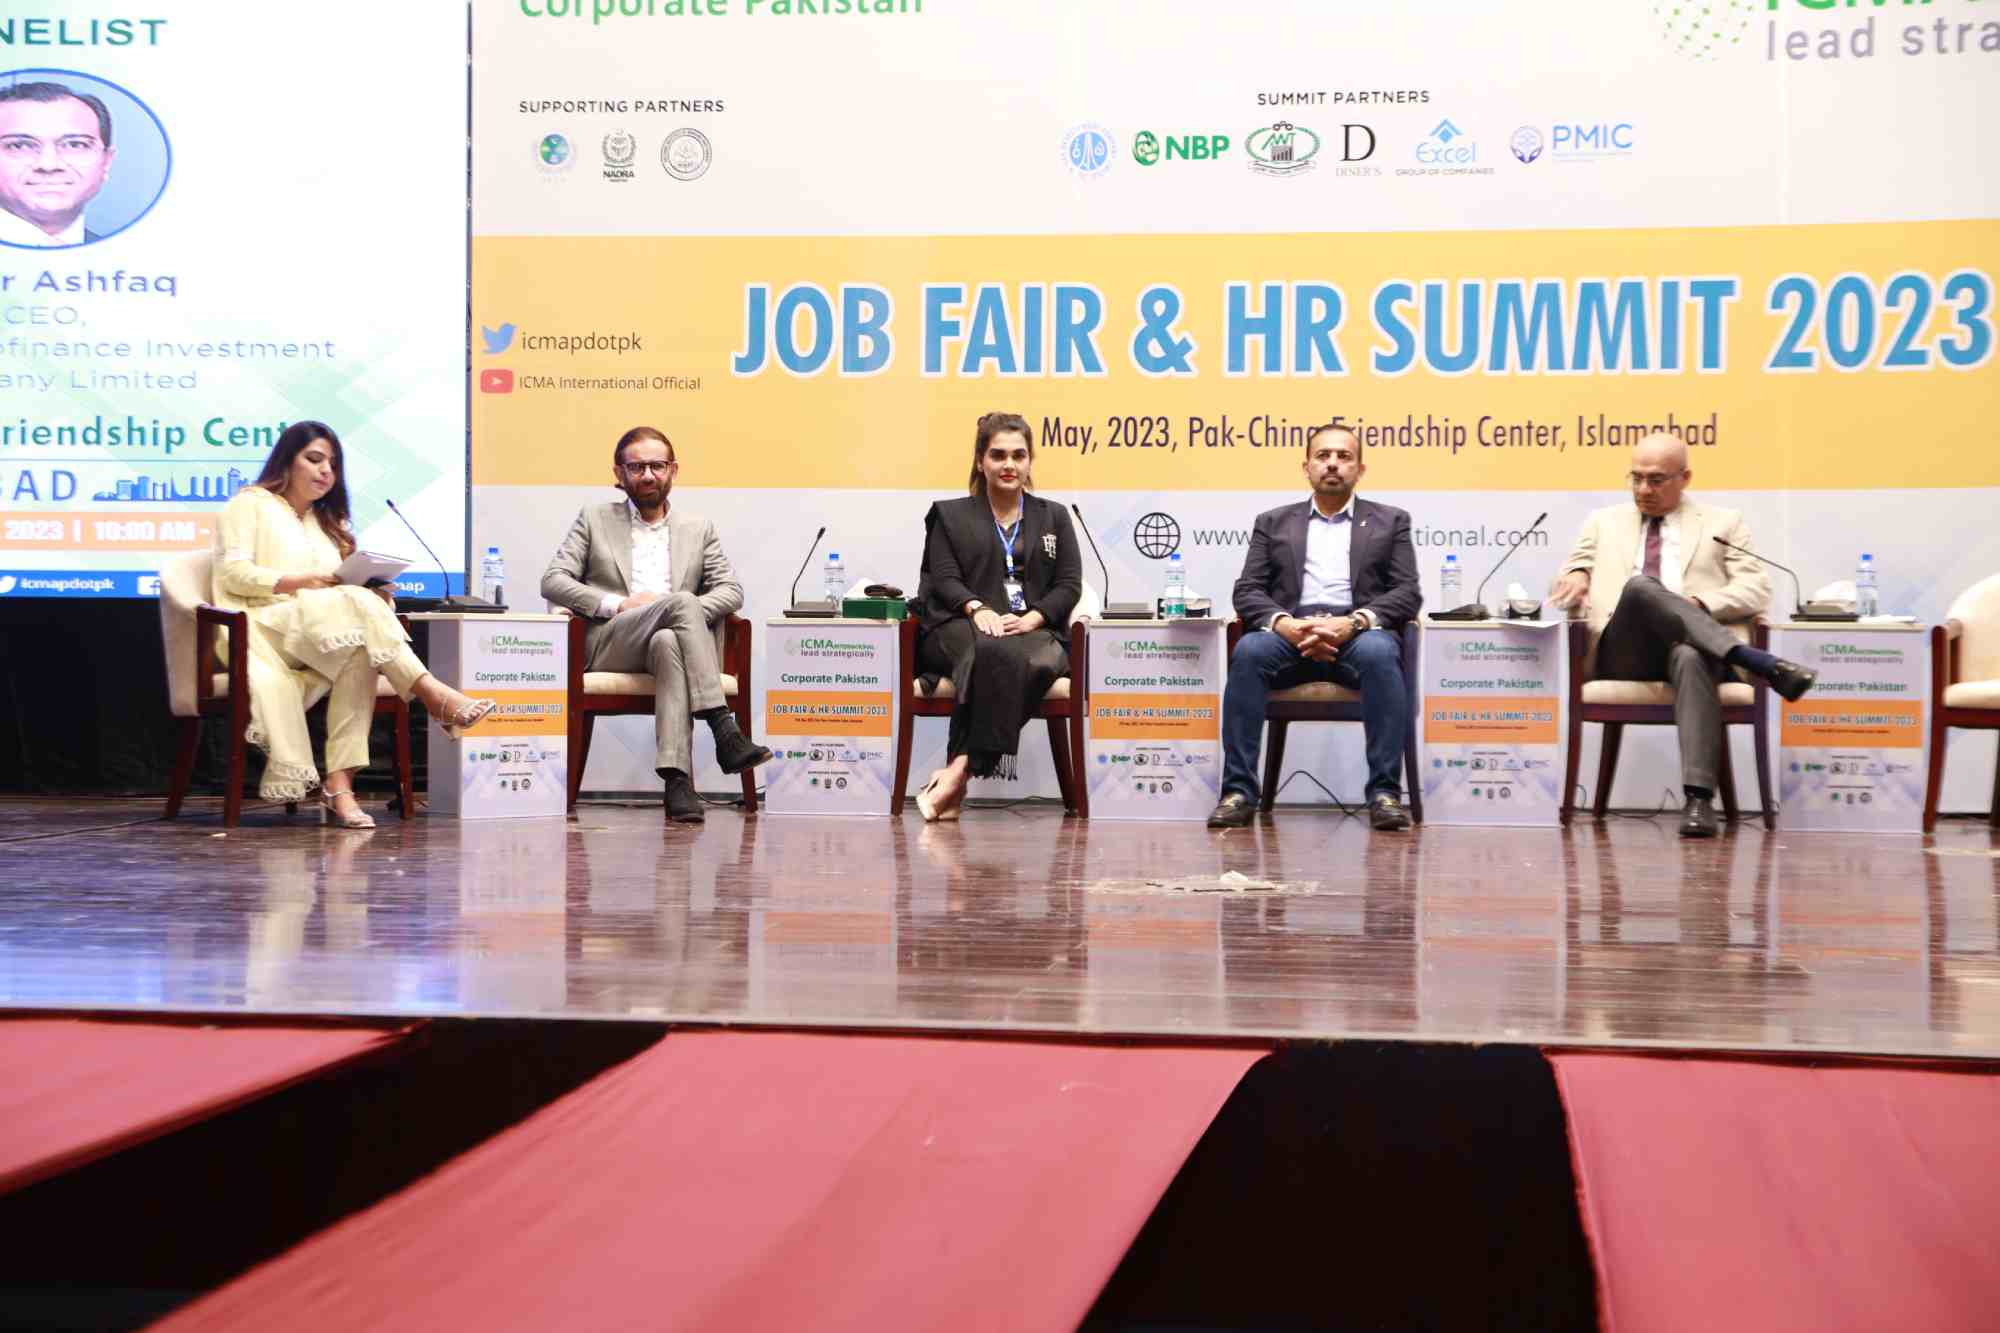 HR Summit & Job Fair 2023 Exhibition - Image 7 - CRI Group™